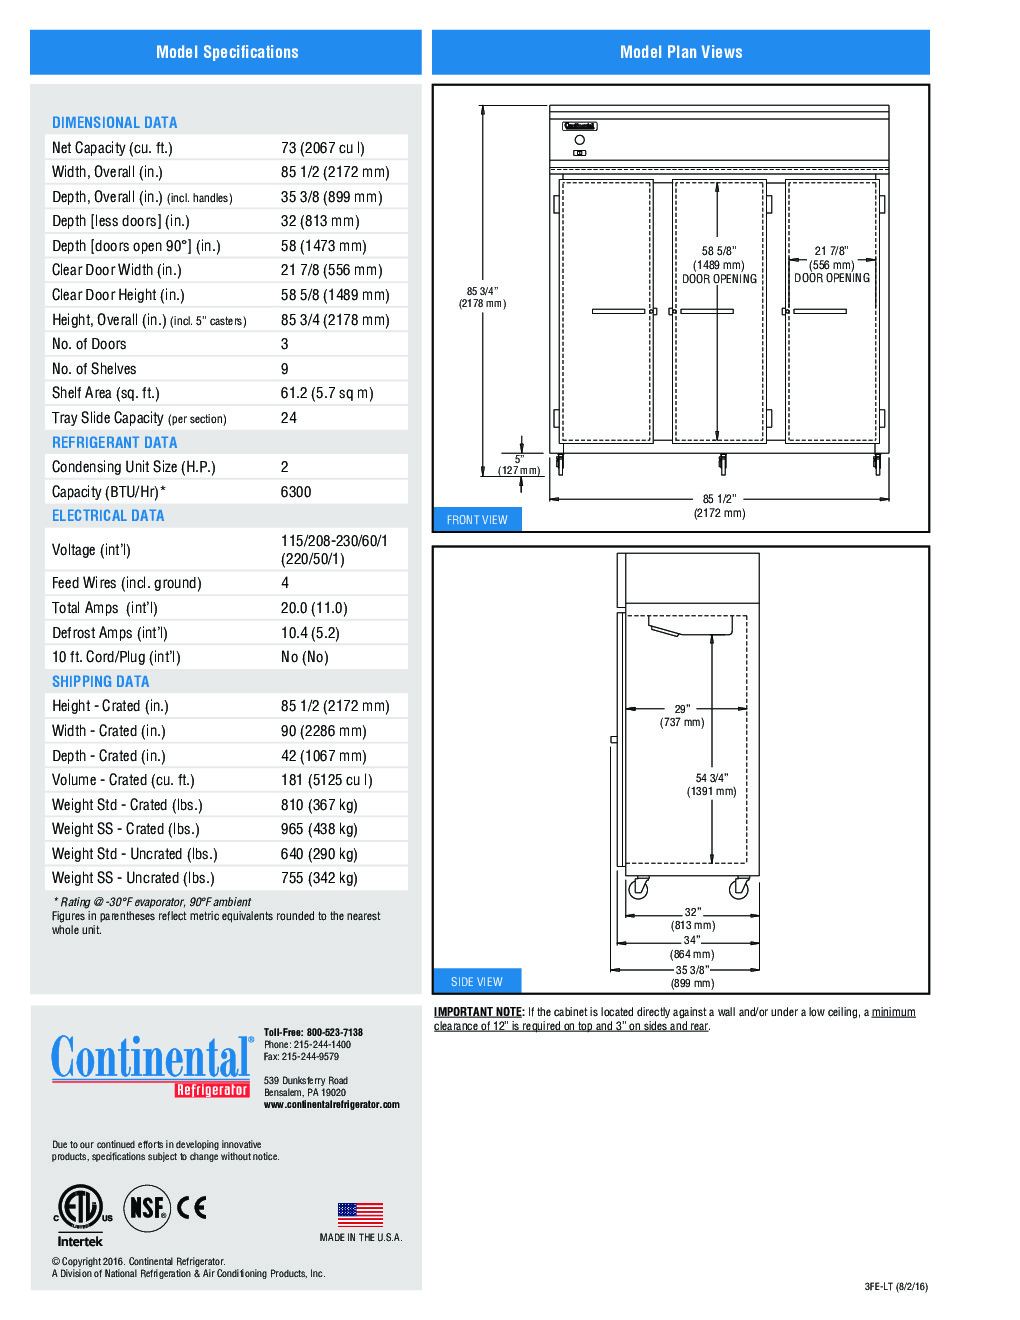 Continental Refrigerator 3FE-LT-SA Reach-In Low Temperature Freezer